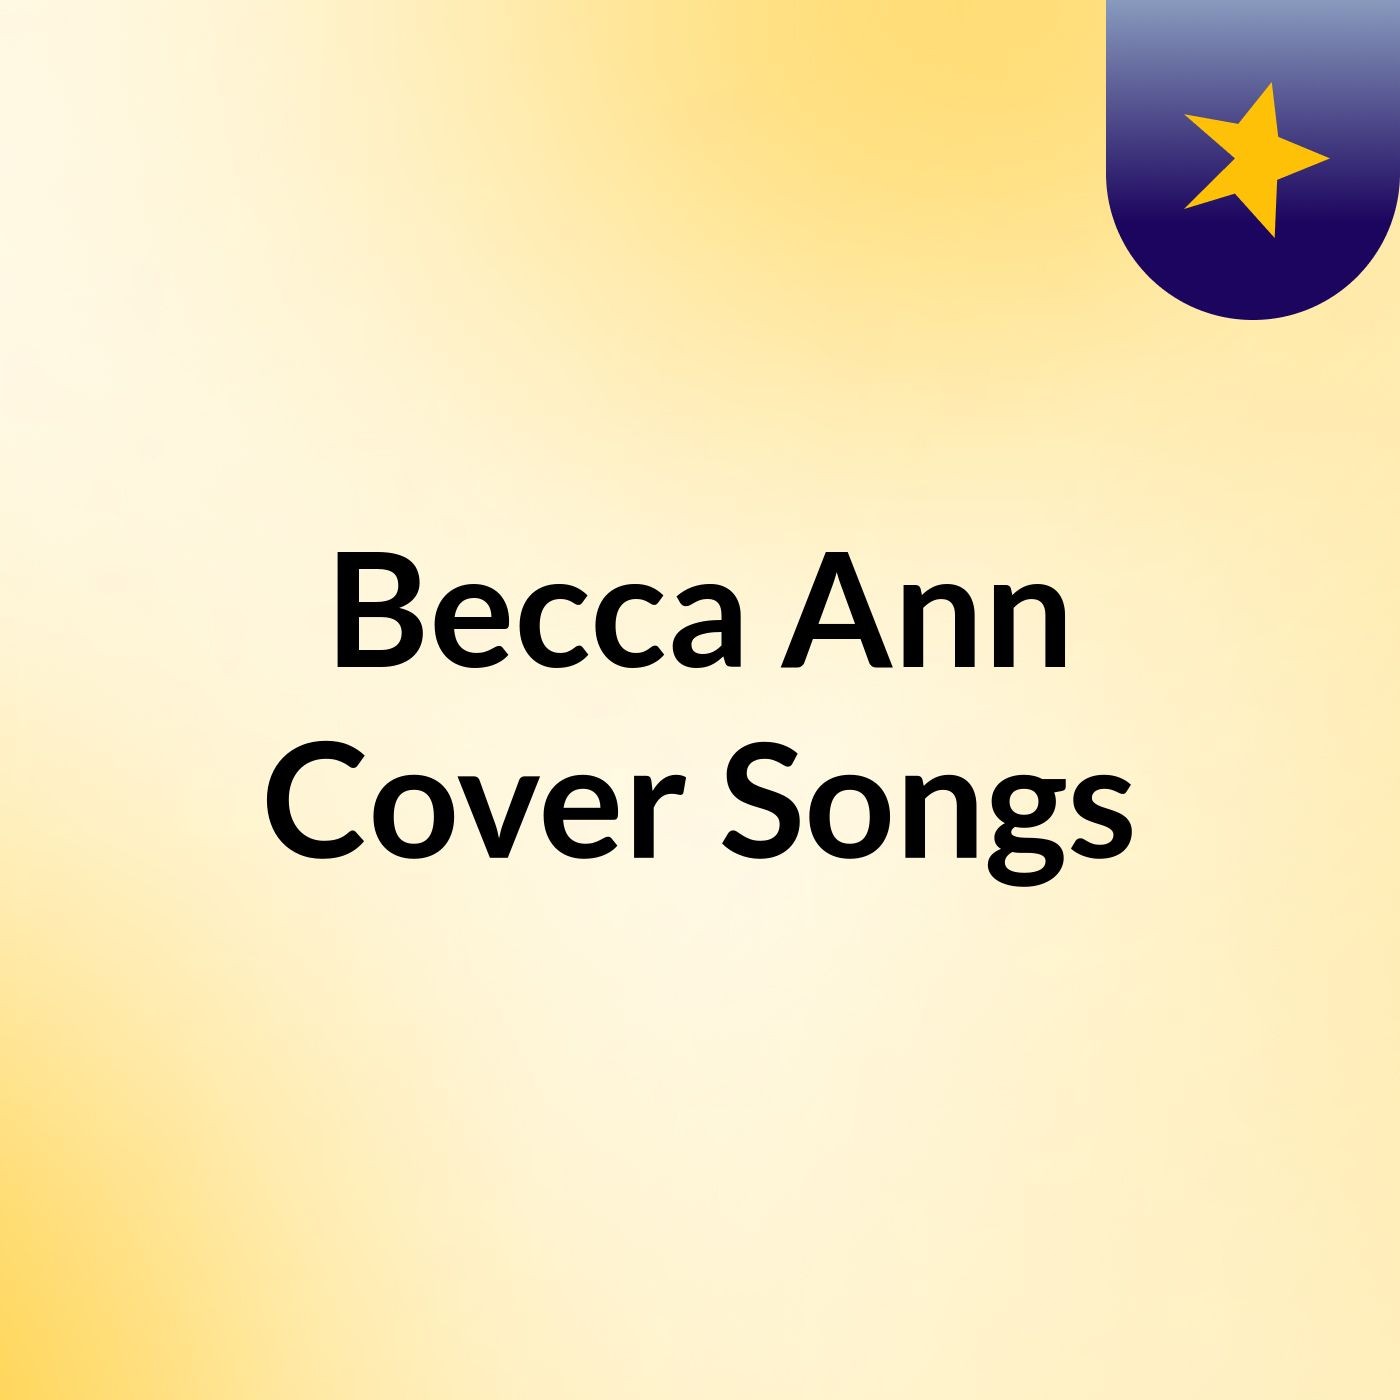 Becca Ann Cover Songs